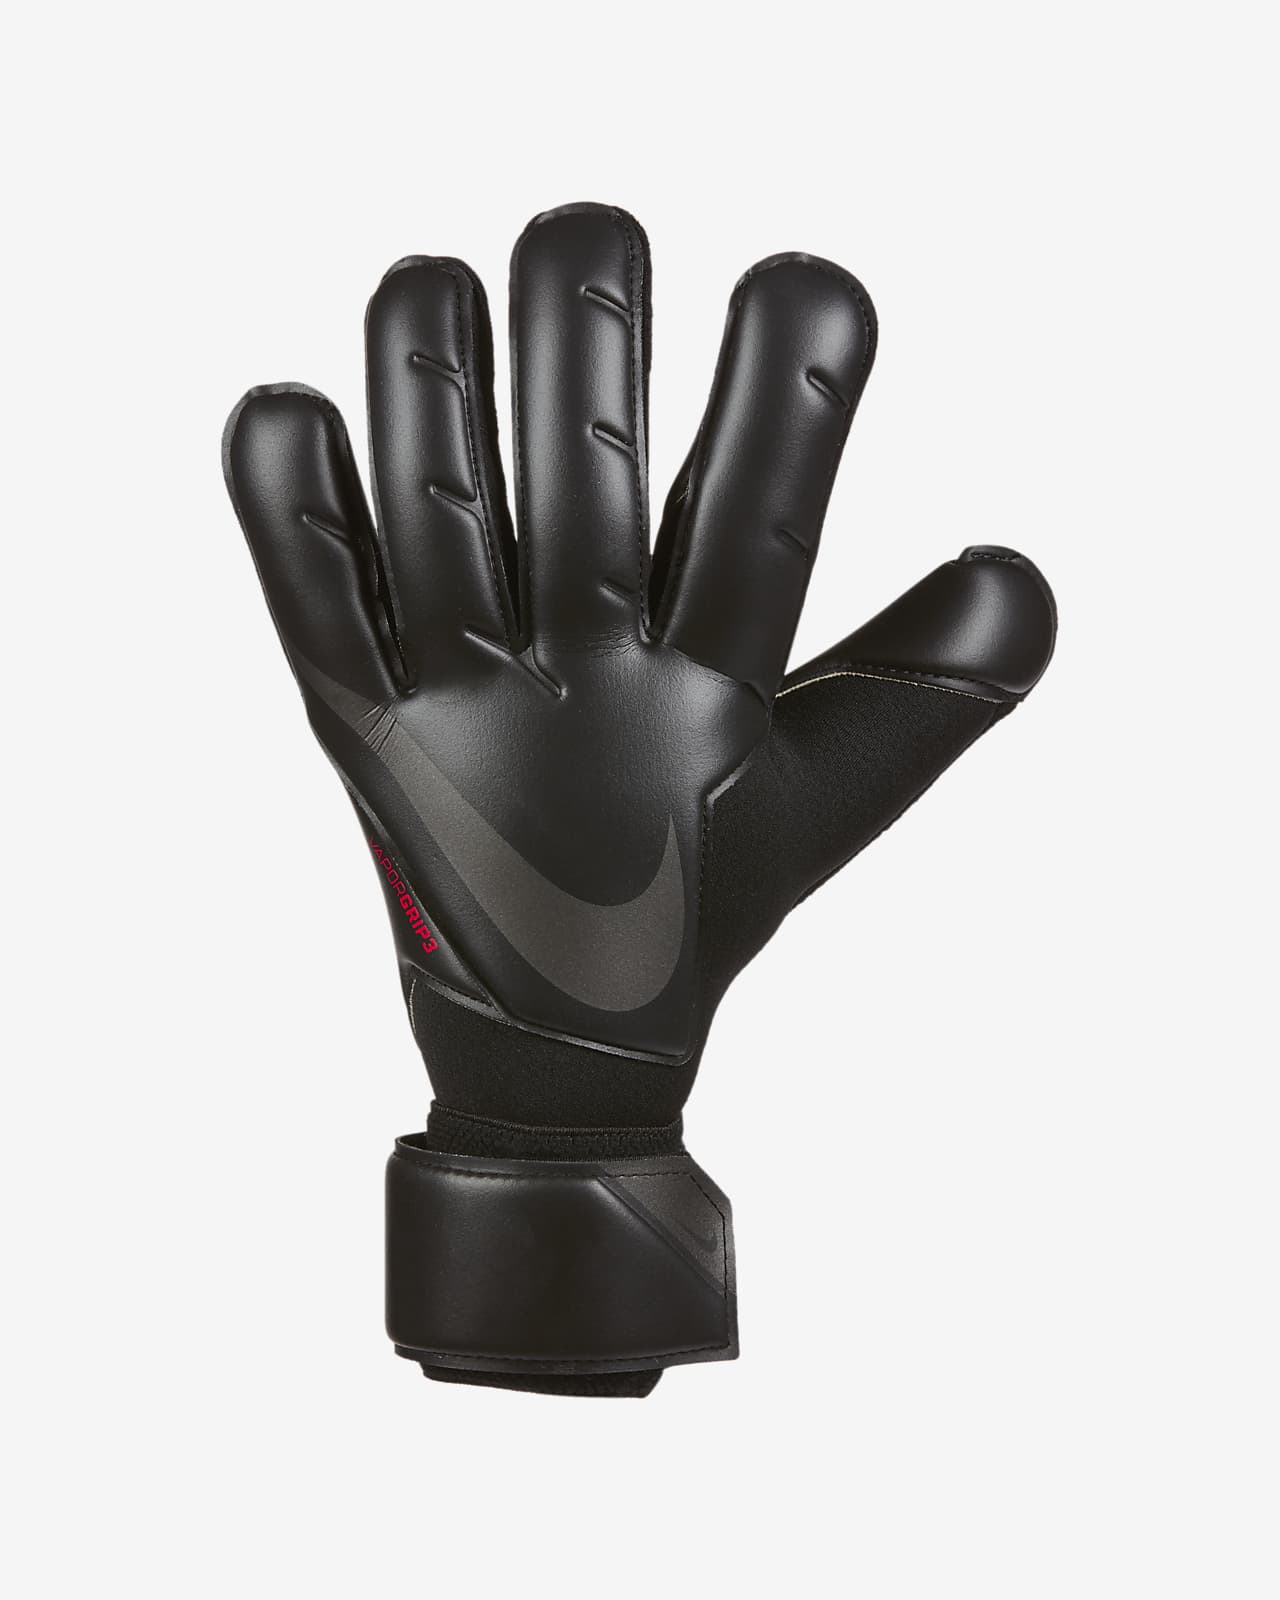 nike grip goalkeeper gloves